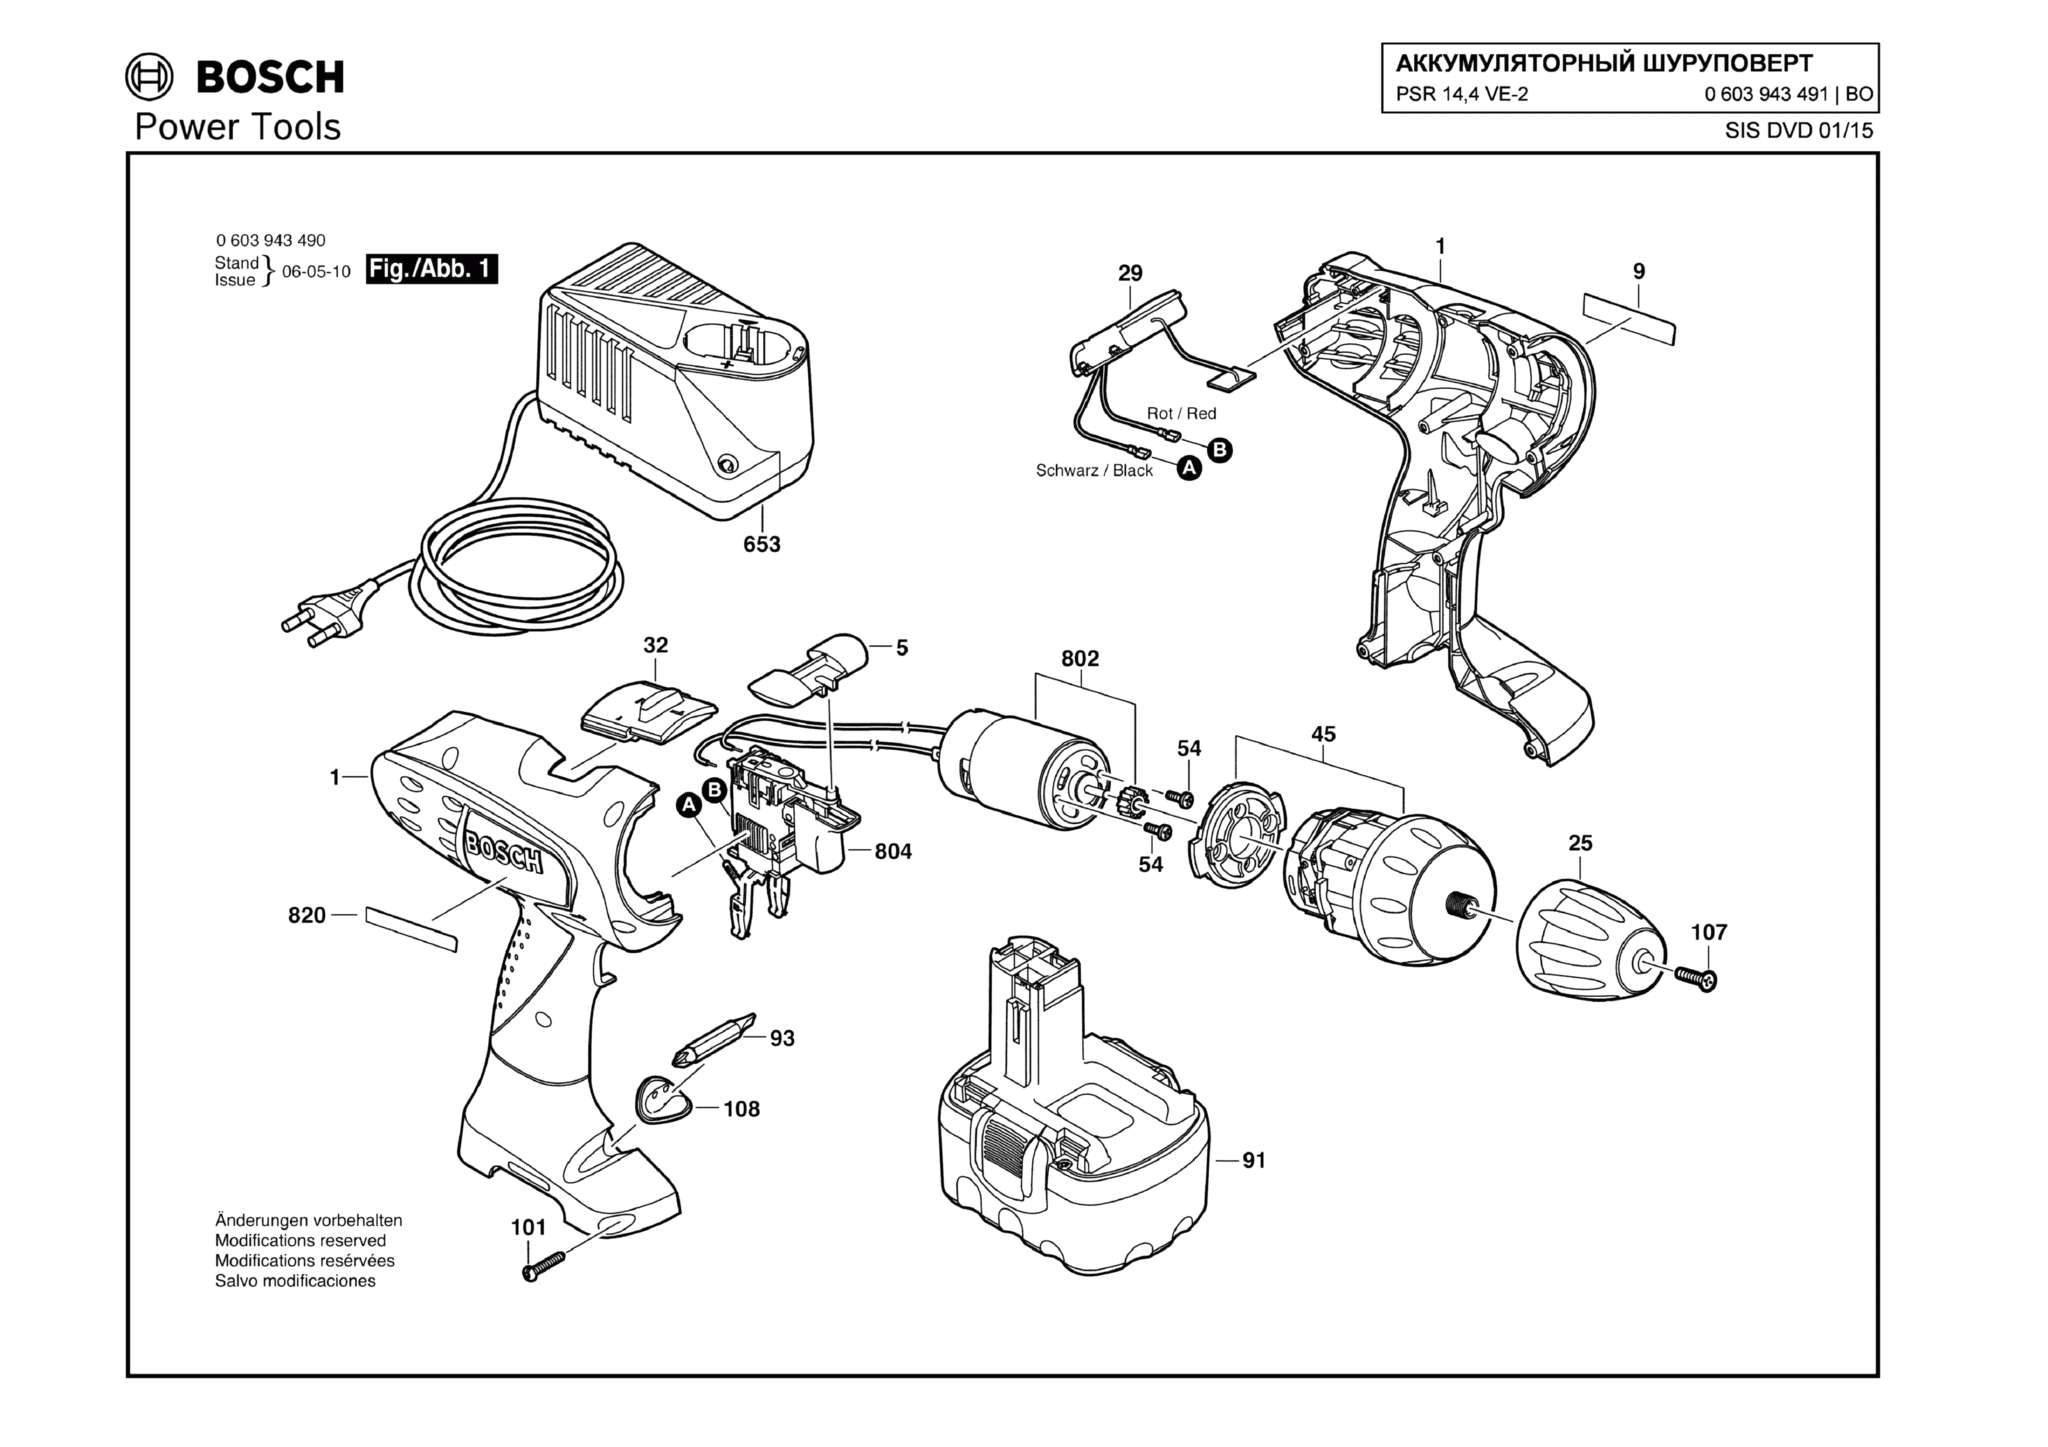 Запчасти, схема и деталировка Bosch PSR 14,4 VE-2 (ТИП 0603943491)